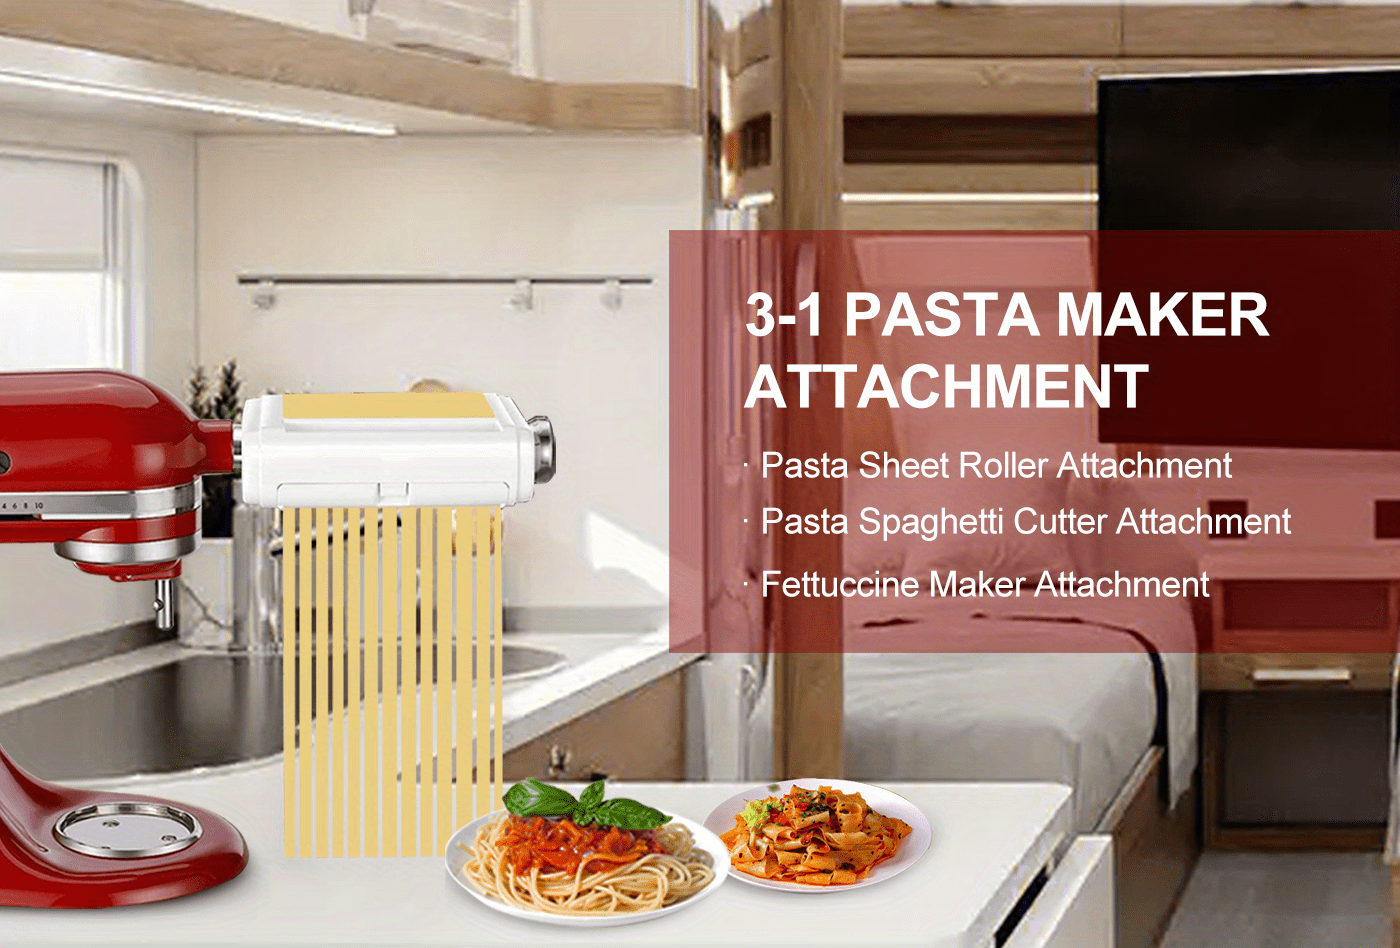 KitchenAid Residential Plastic Pasta Press Attachment at